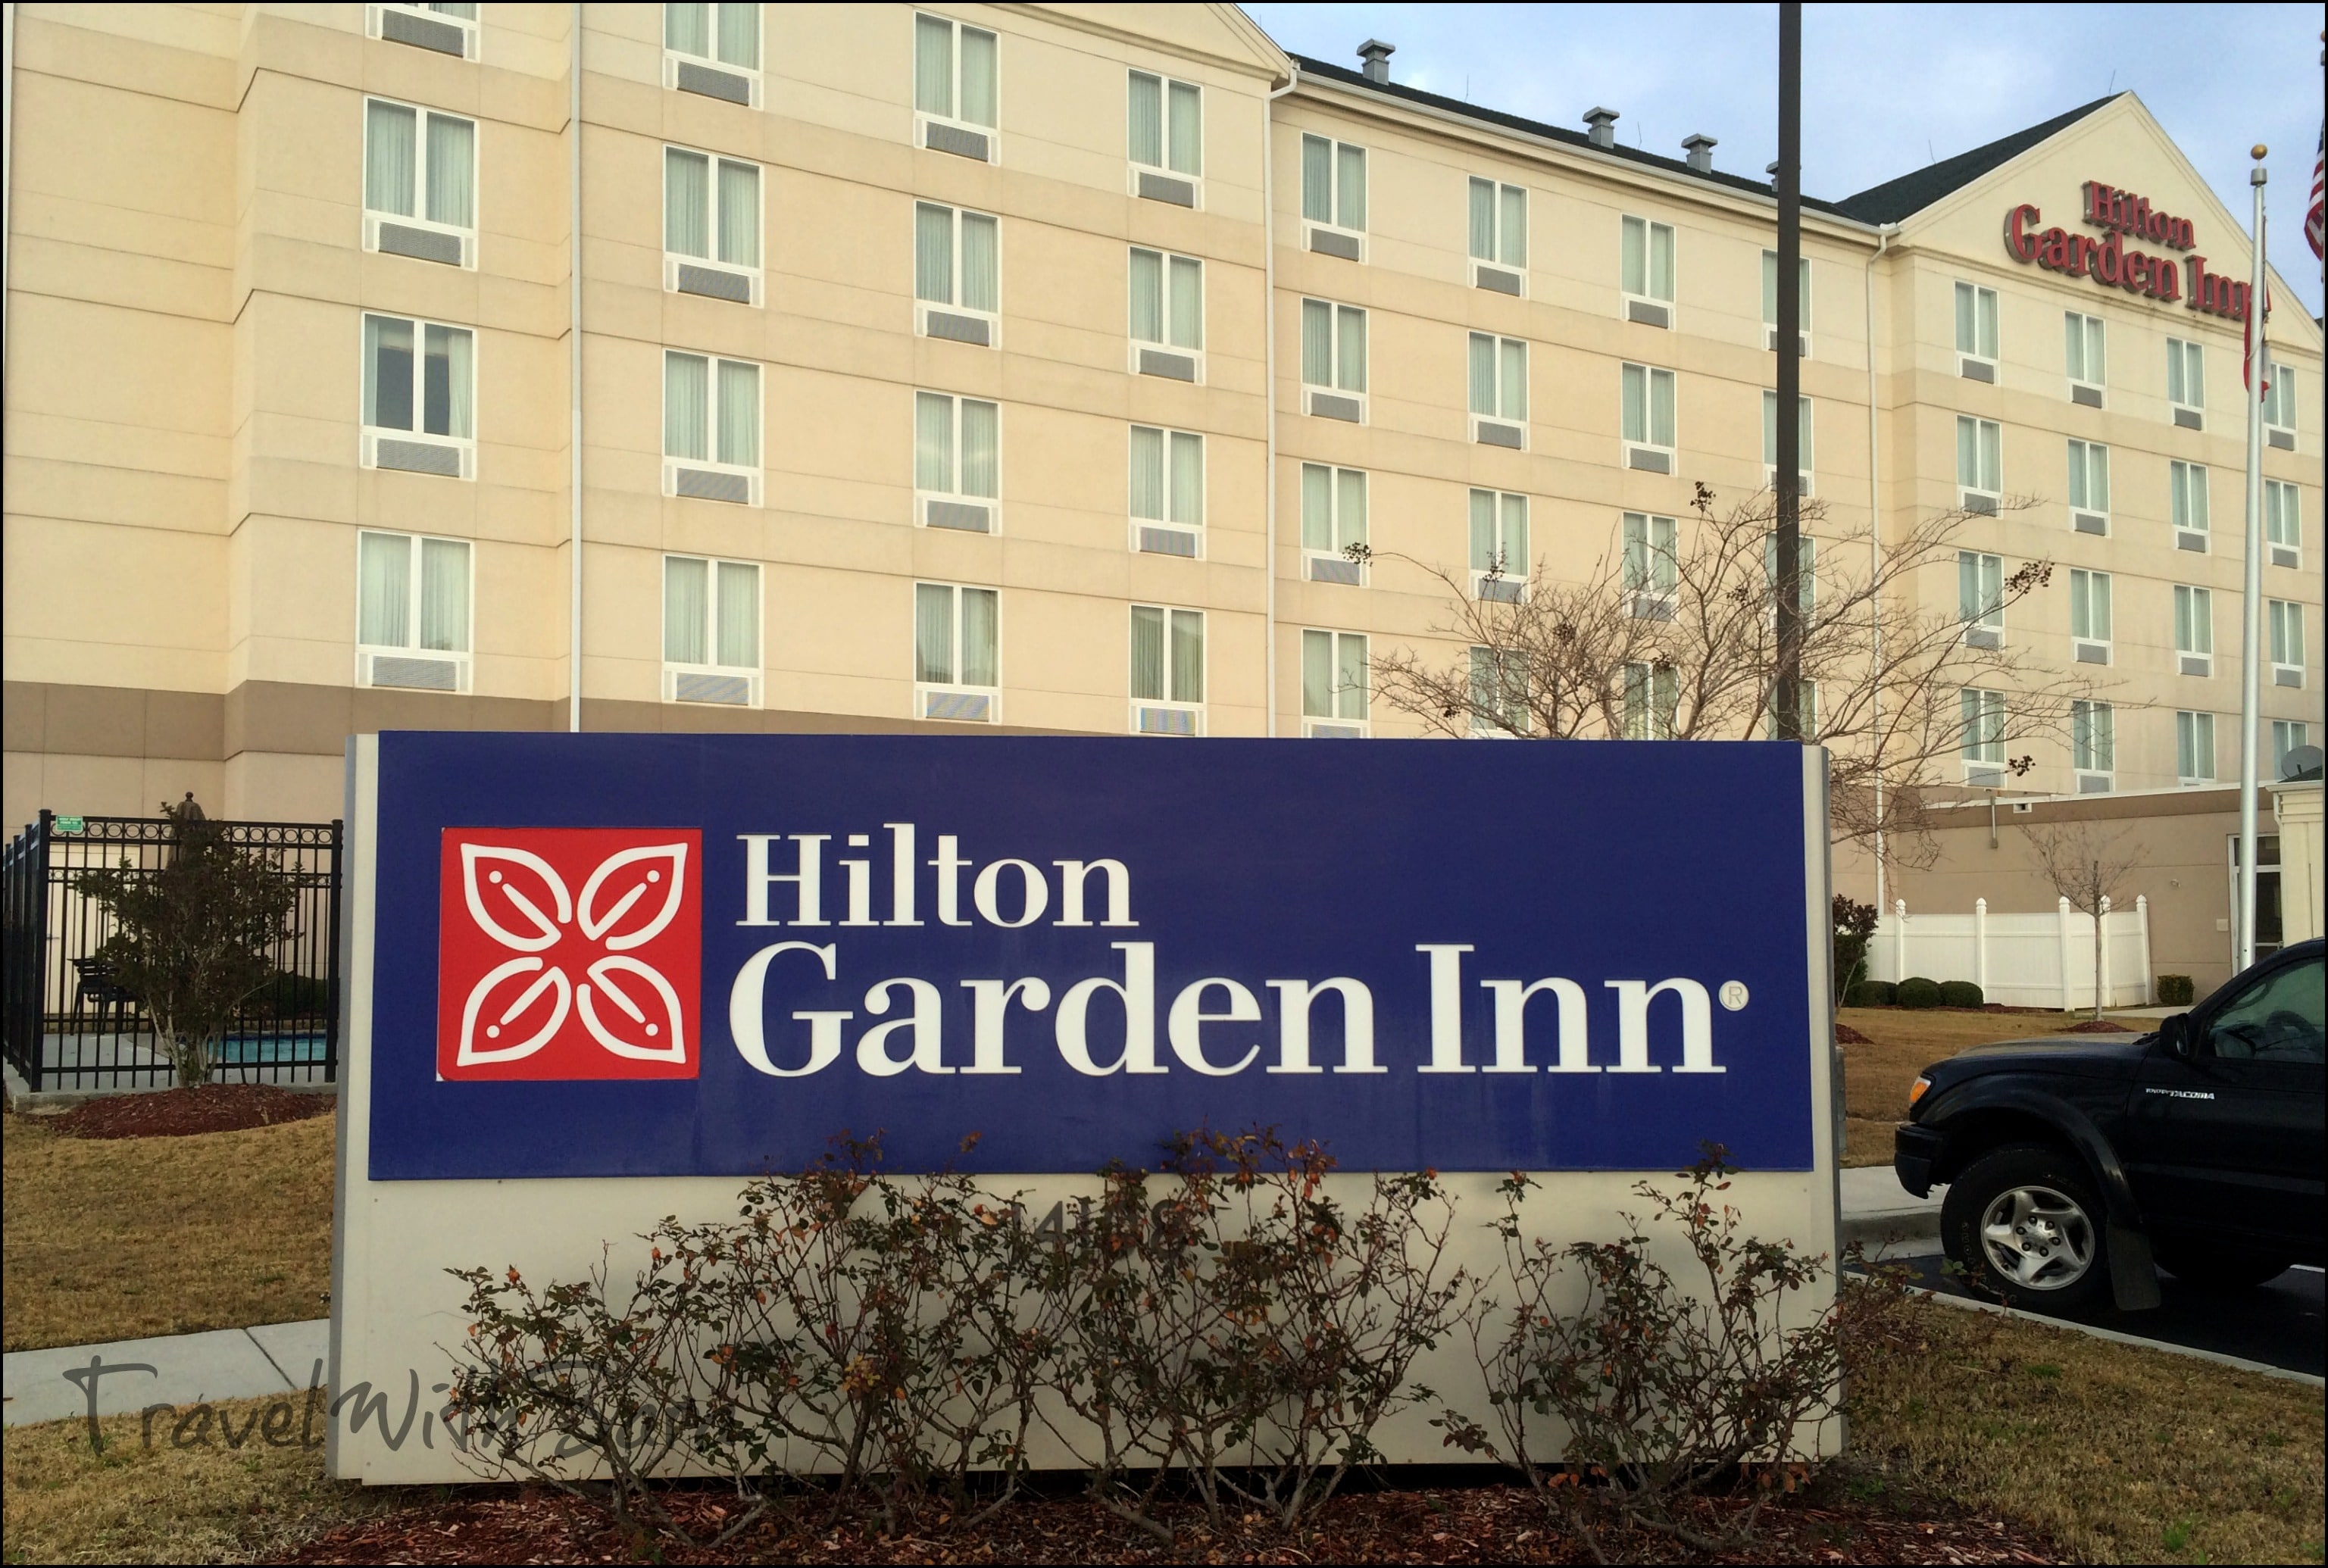 Hilton Garden Inn Gulport Airport Hotel Gulfport Mississippi Travel